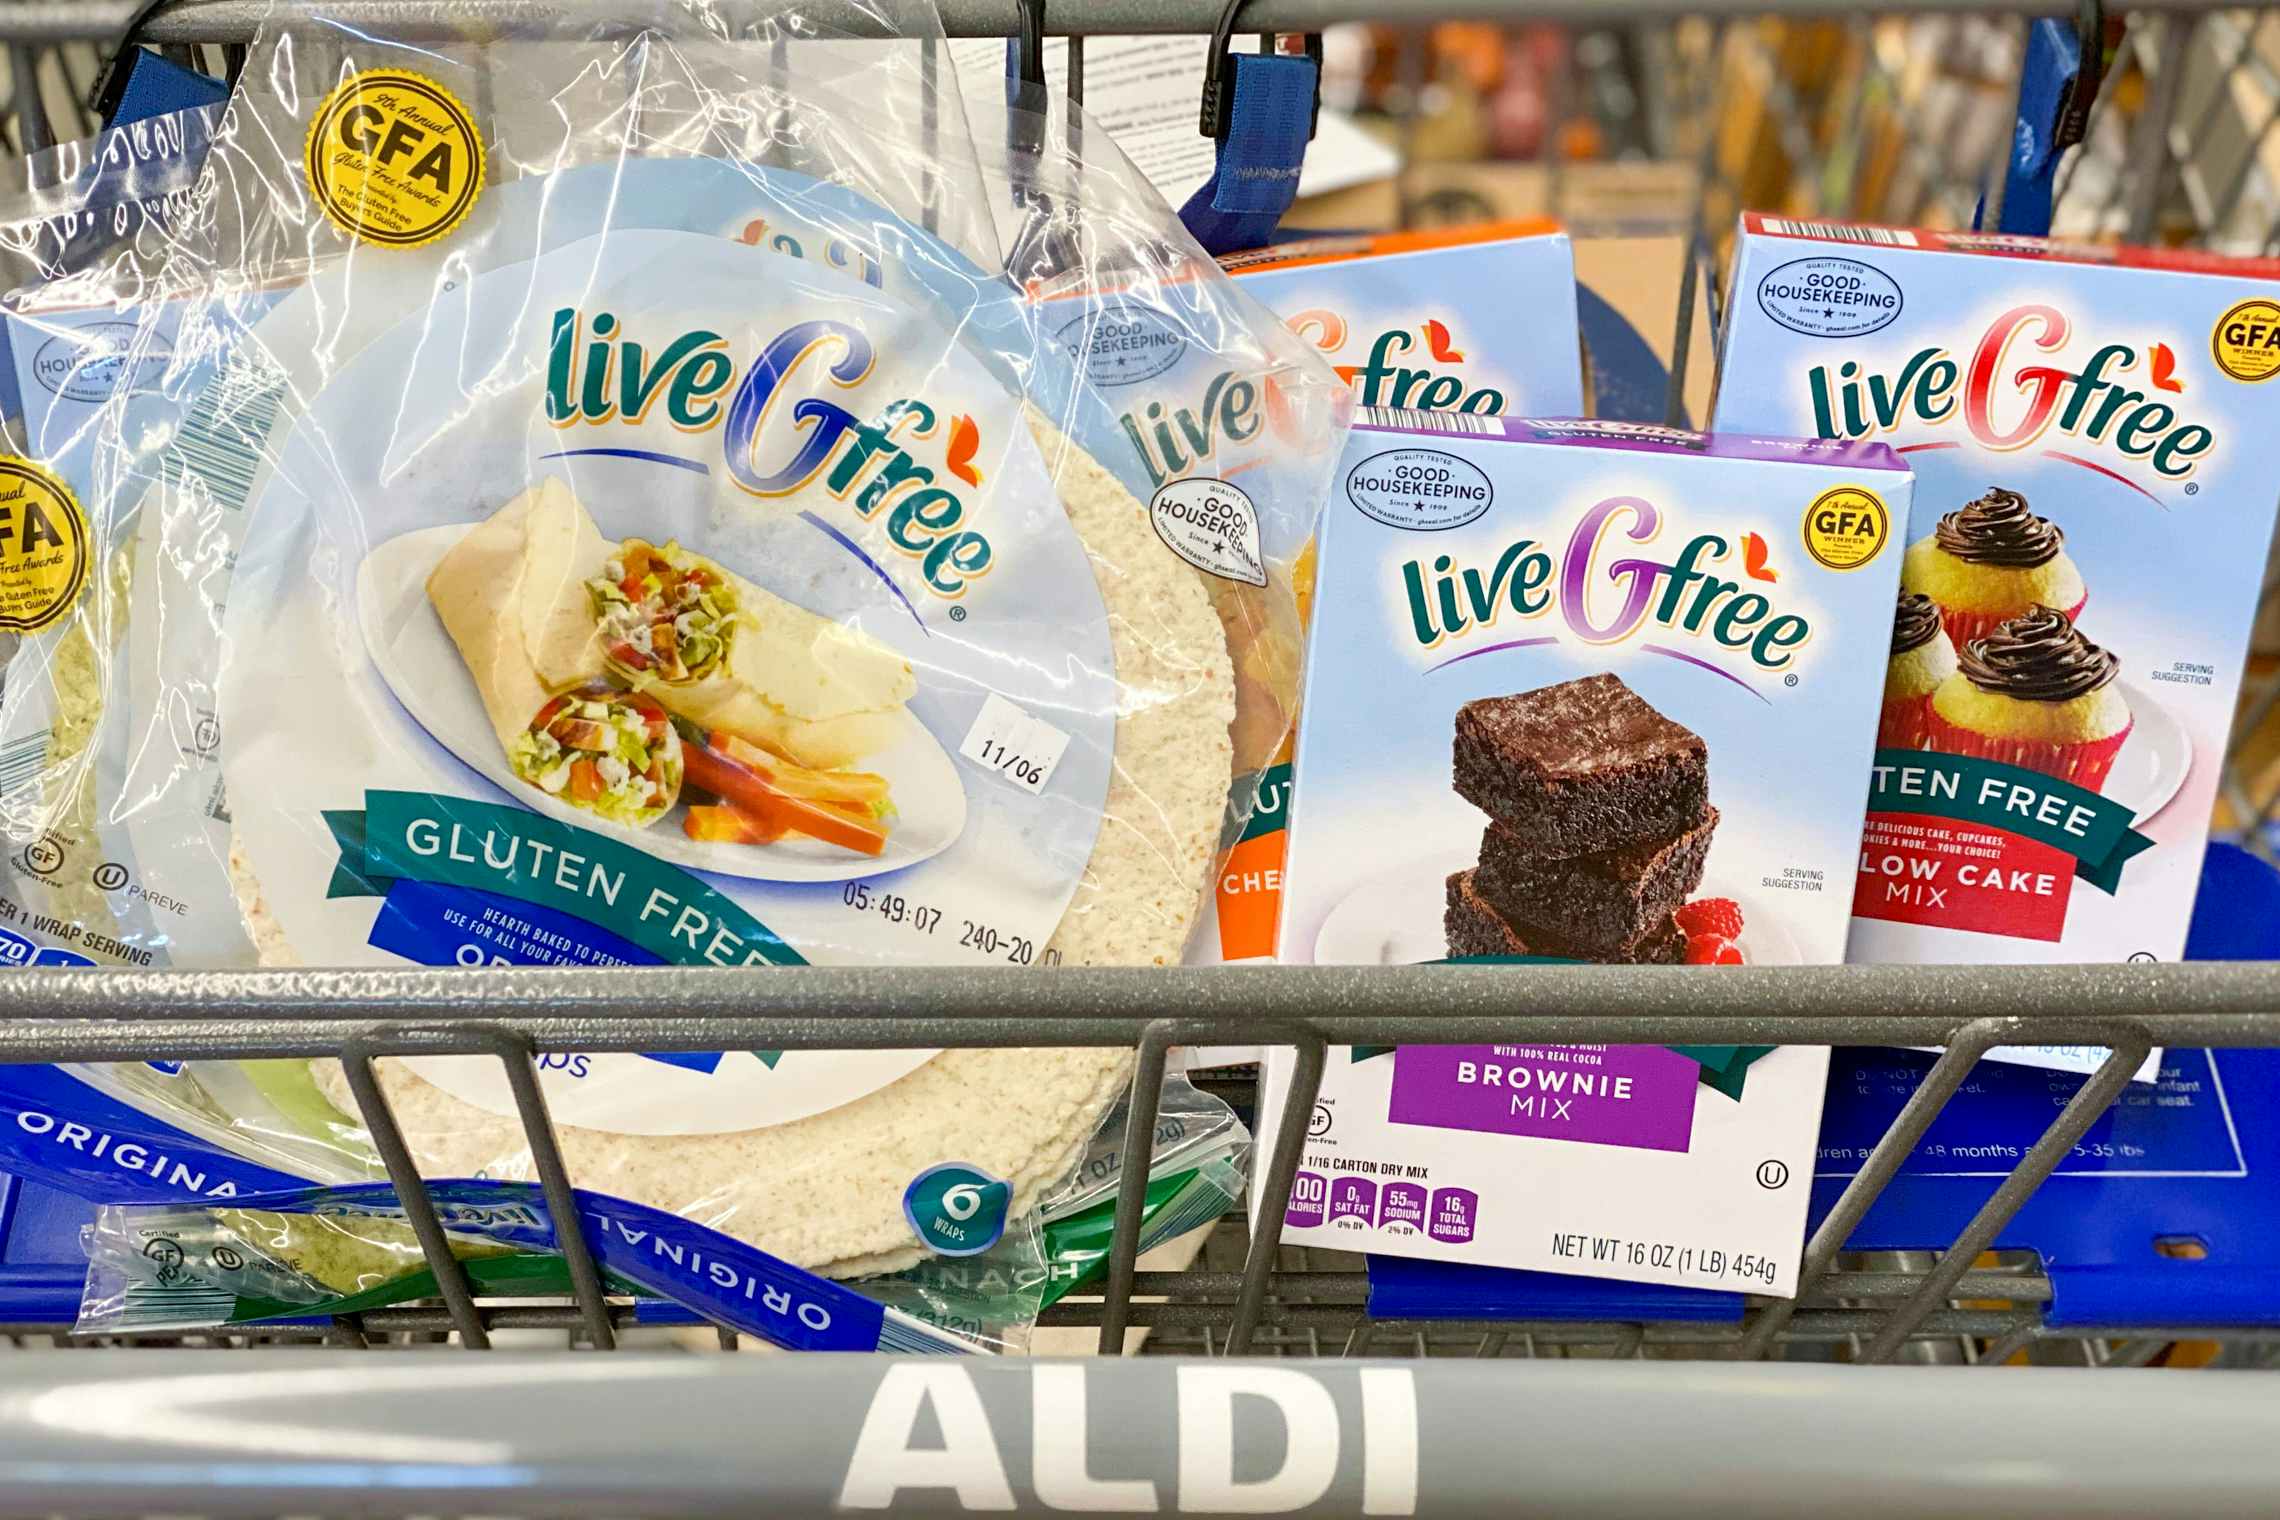 Gluten free foods in an Aldi shopping cart